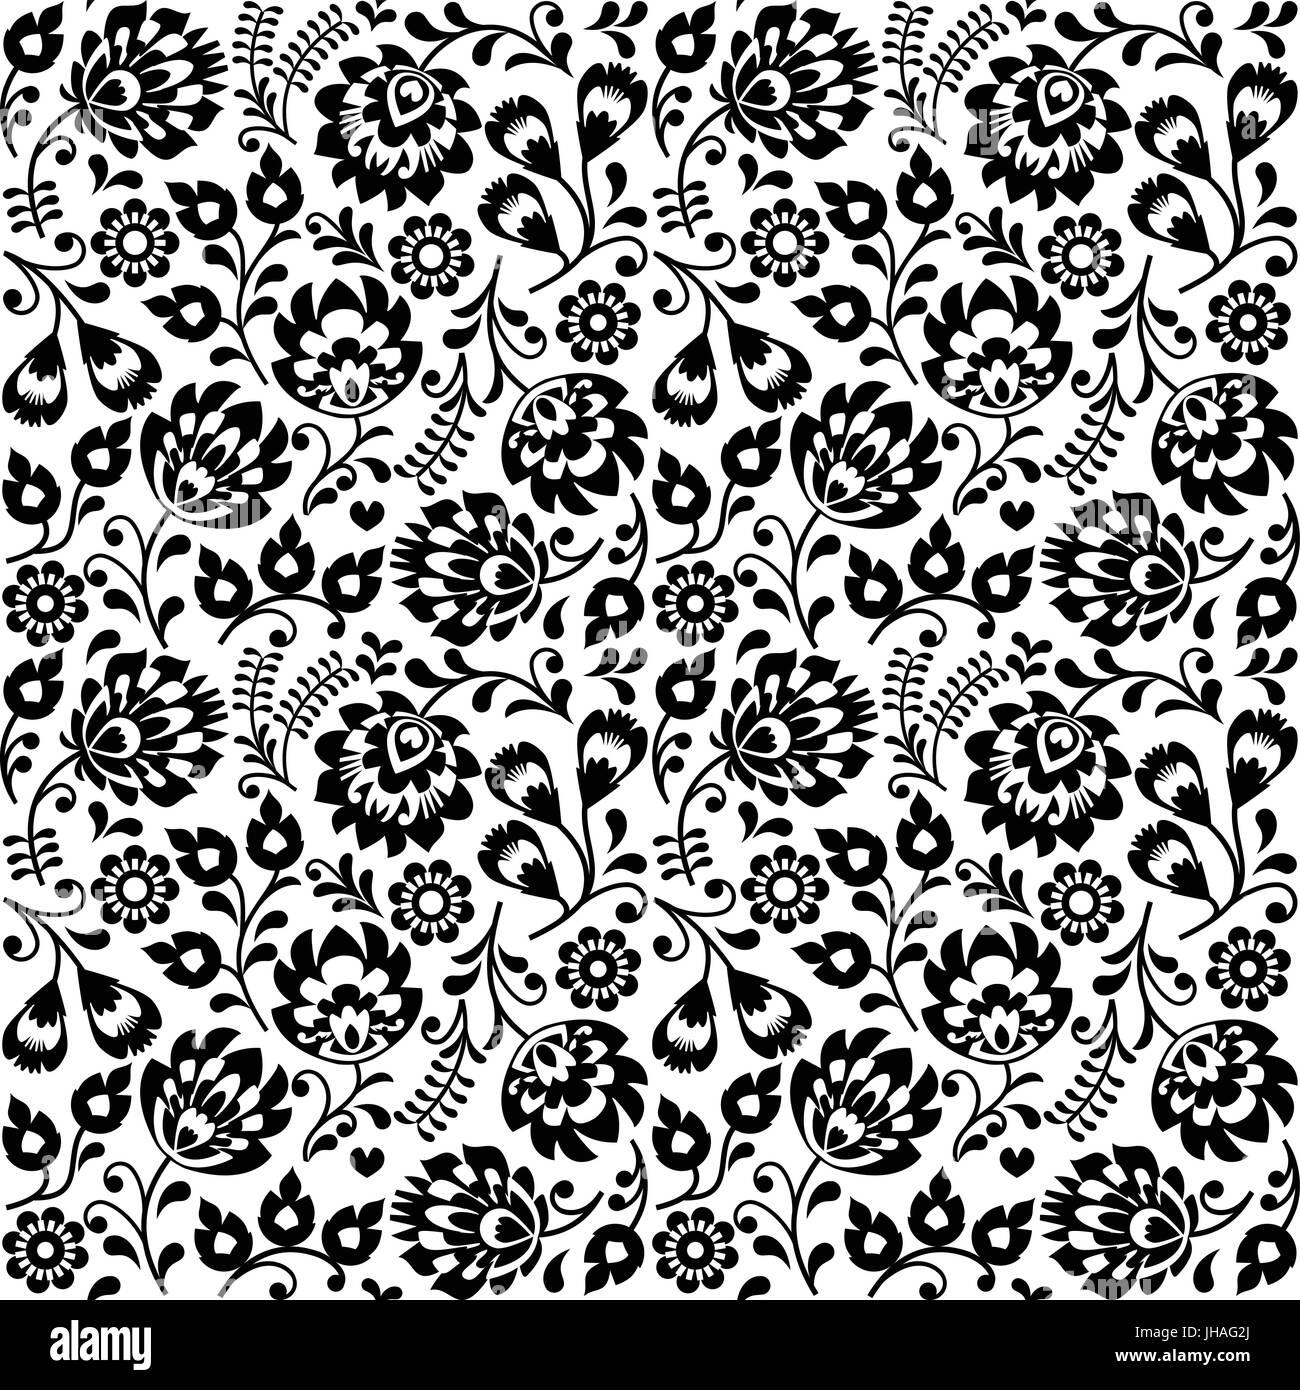 Seamless Polish folk art black floral pattern - wzory lowickie, wycinanki    Repetitive background with flowers - Slavic folk art pattern Stock Vector